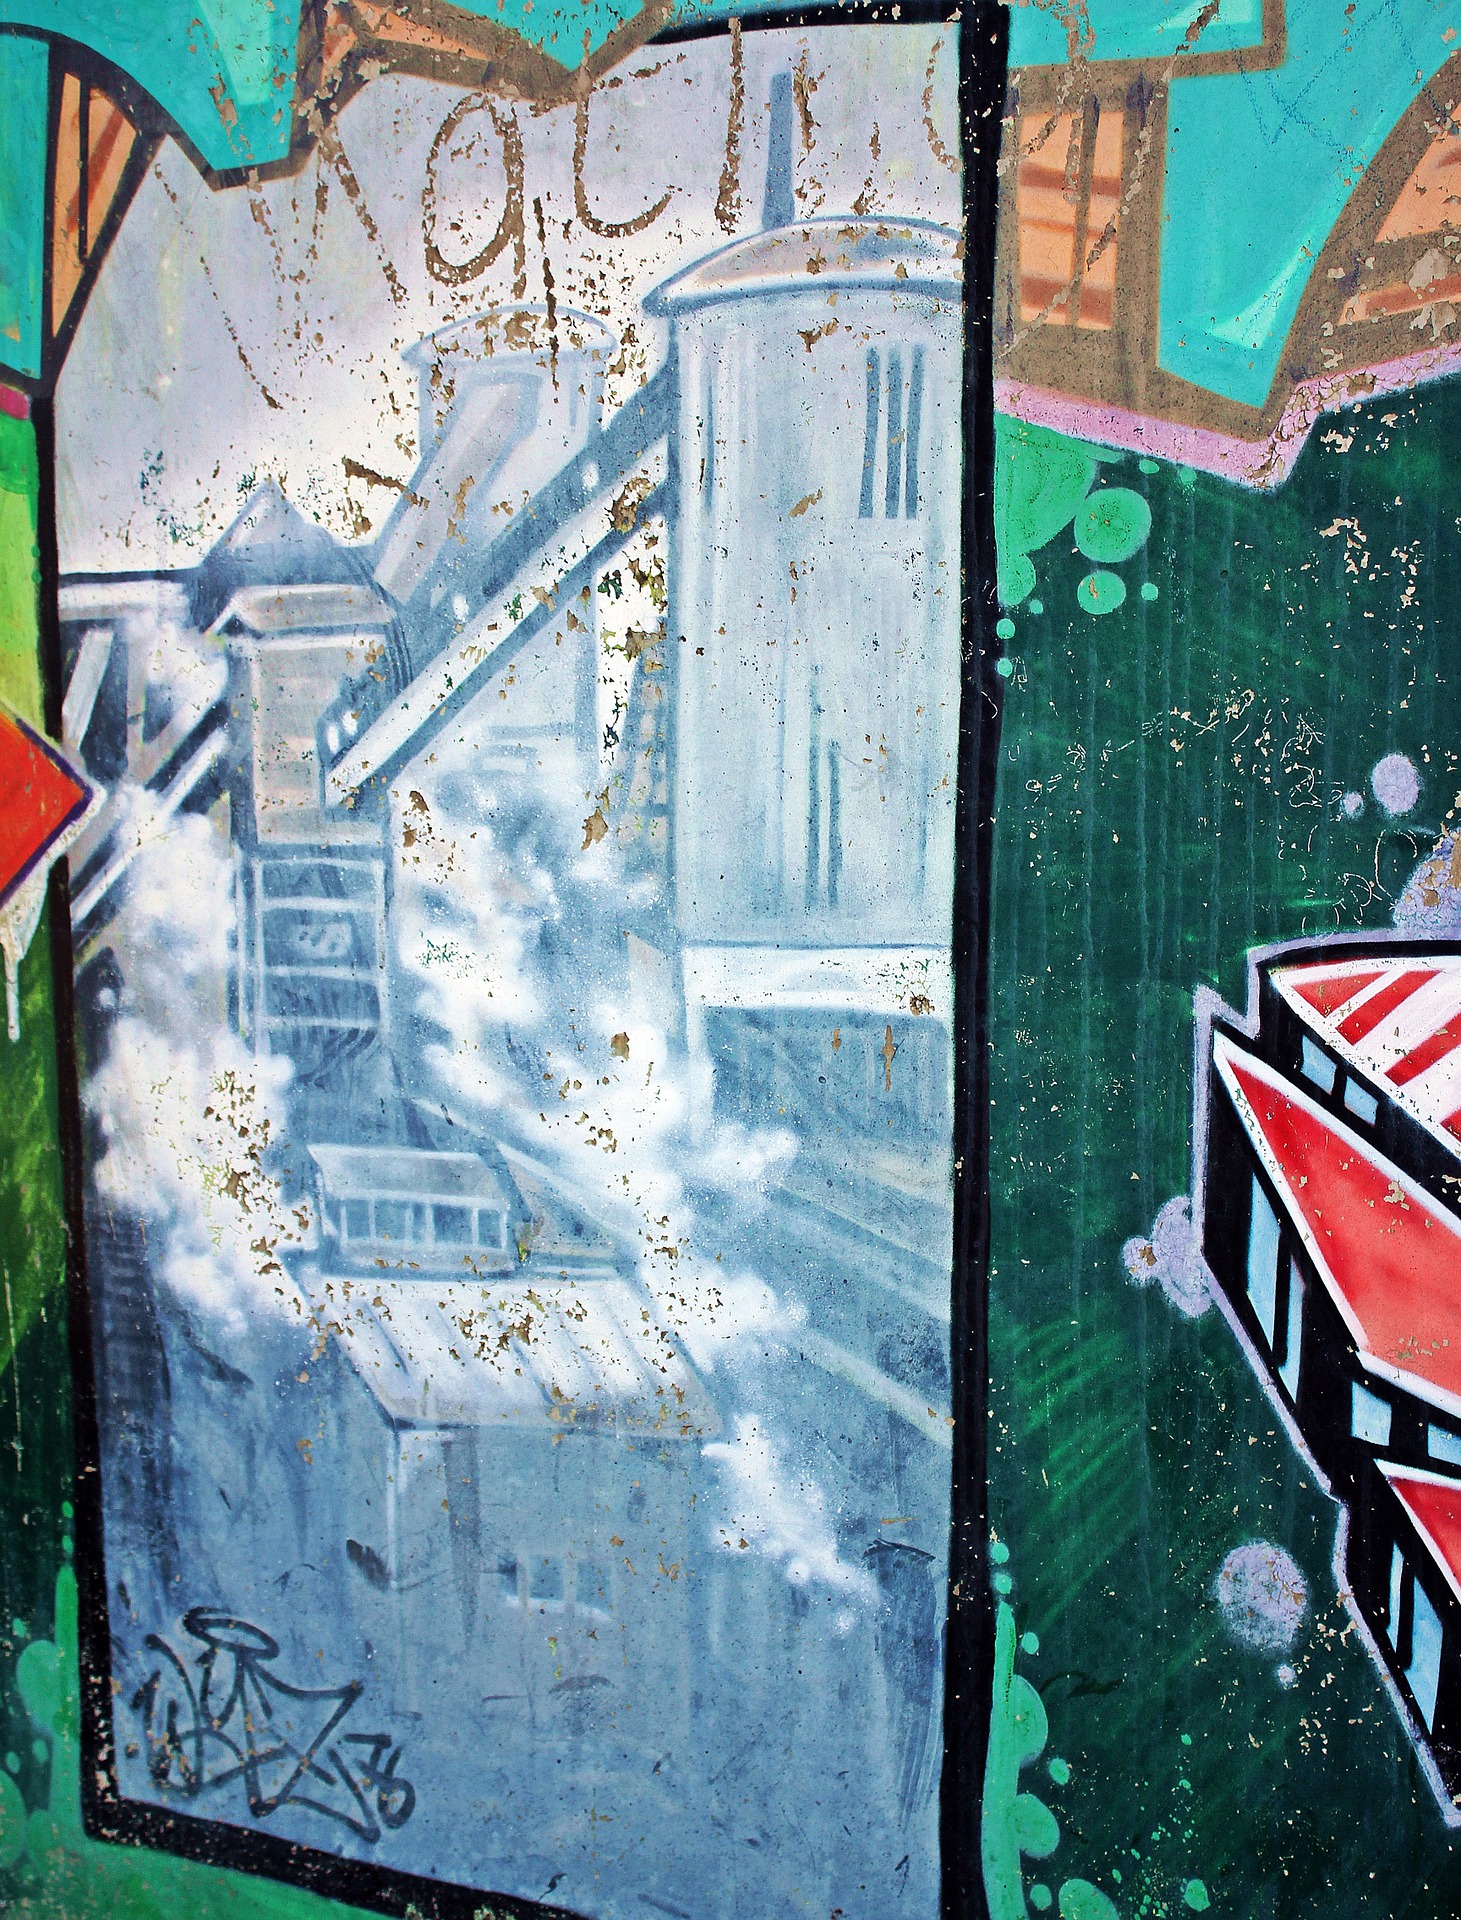 Painted Wall, Art, Ghetto, Graffiti, Paint, HQ Photo